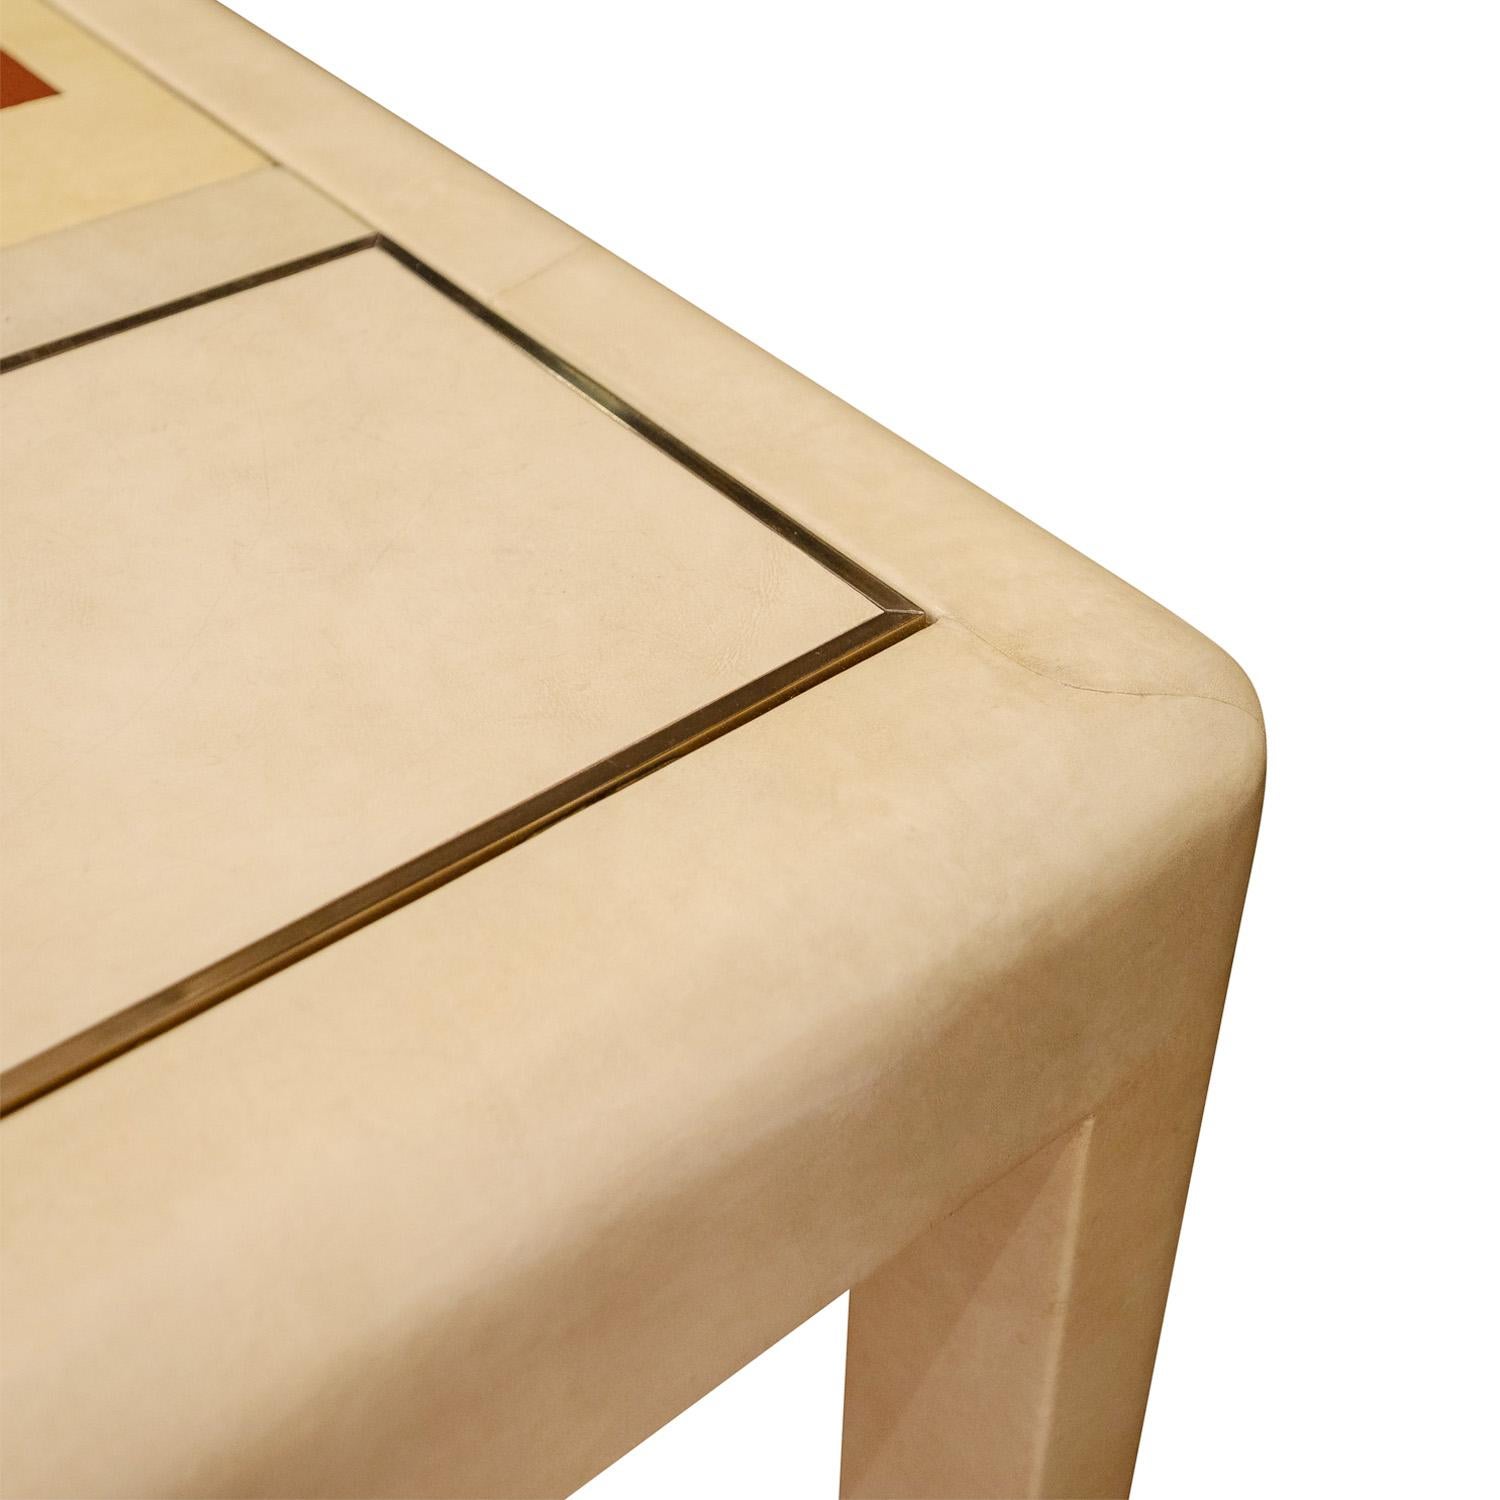 Karl Springer Rare Backgammon/Games Table in Lacquered Goatskin 1970s For Sale 2